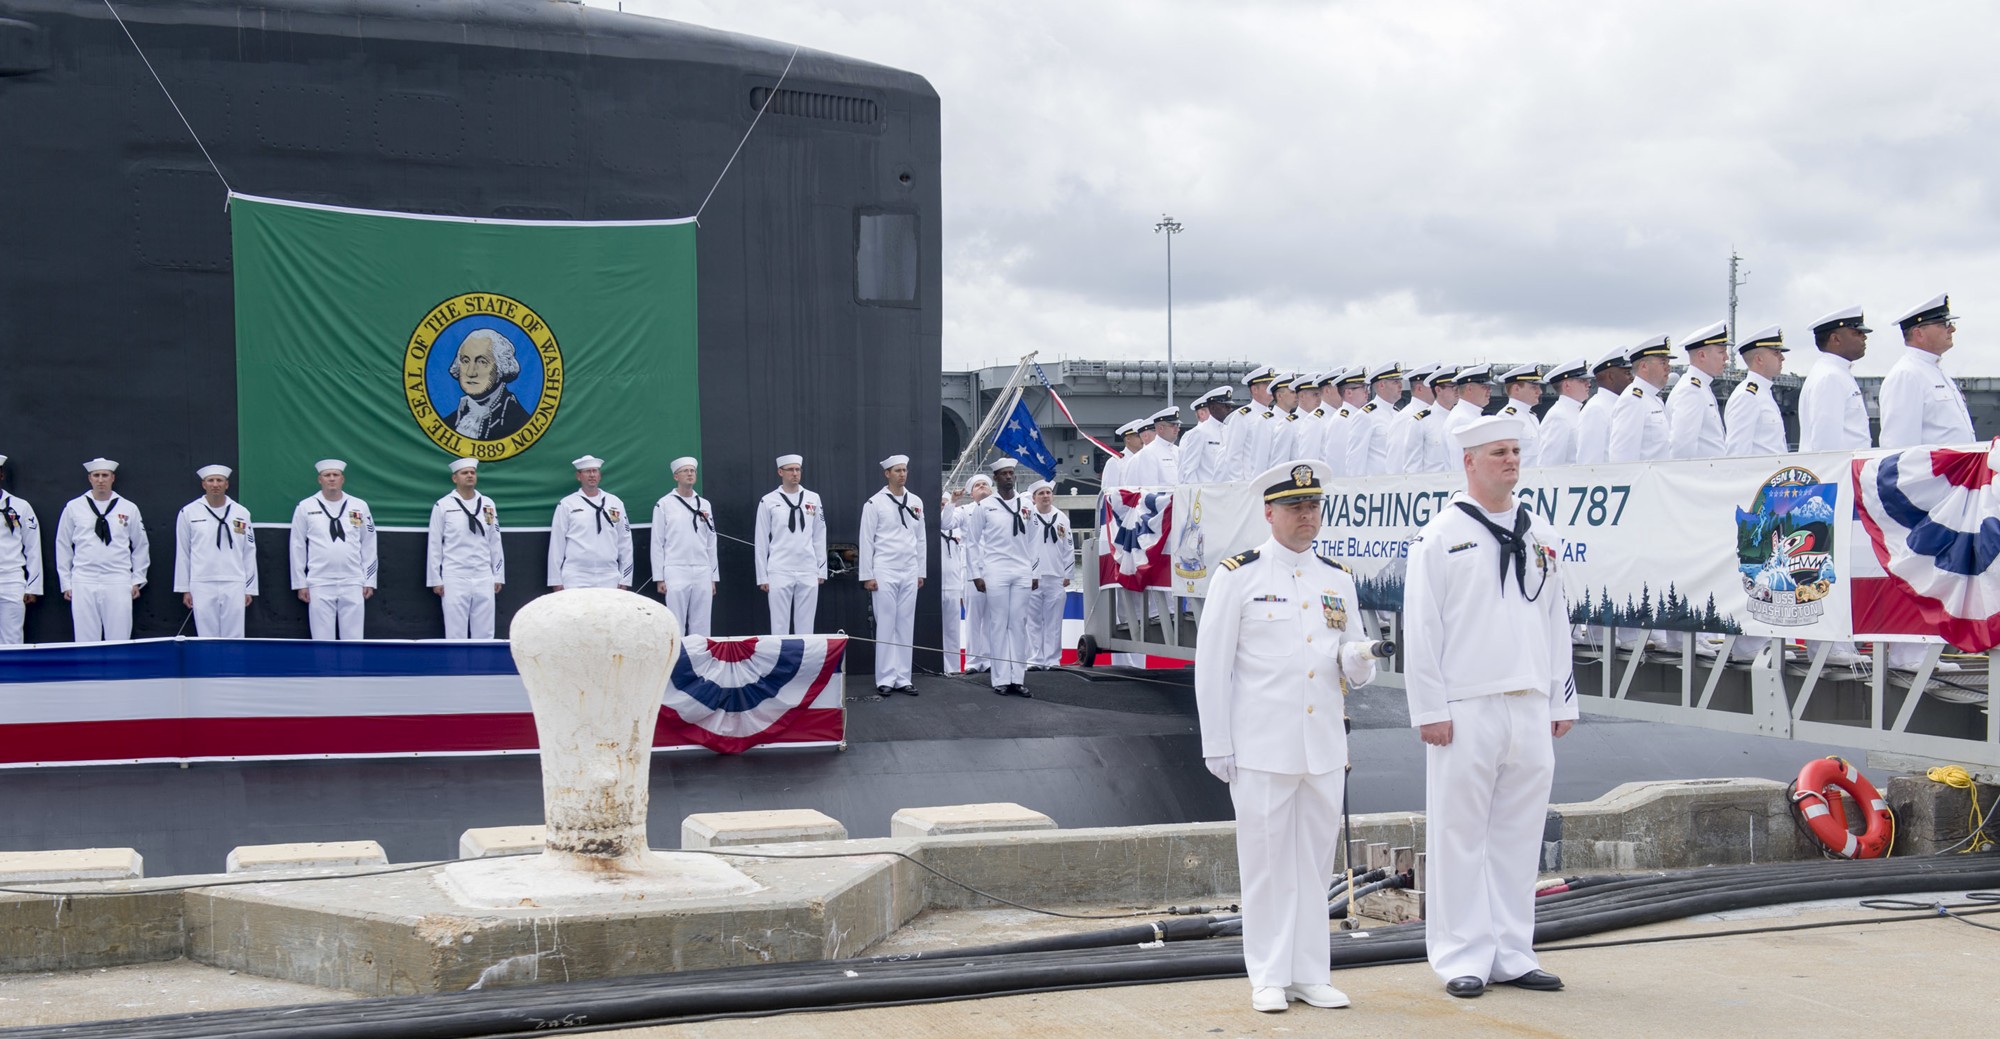 ssn-787 uss washington virginia class attack submarine us navy commissioning ceremony norfolk 24